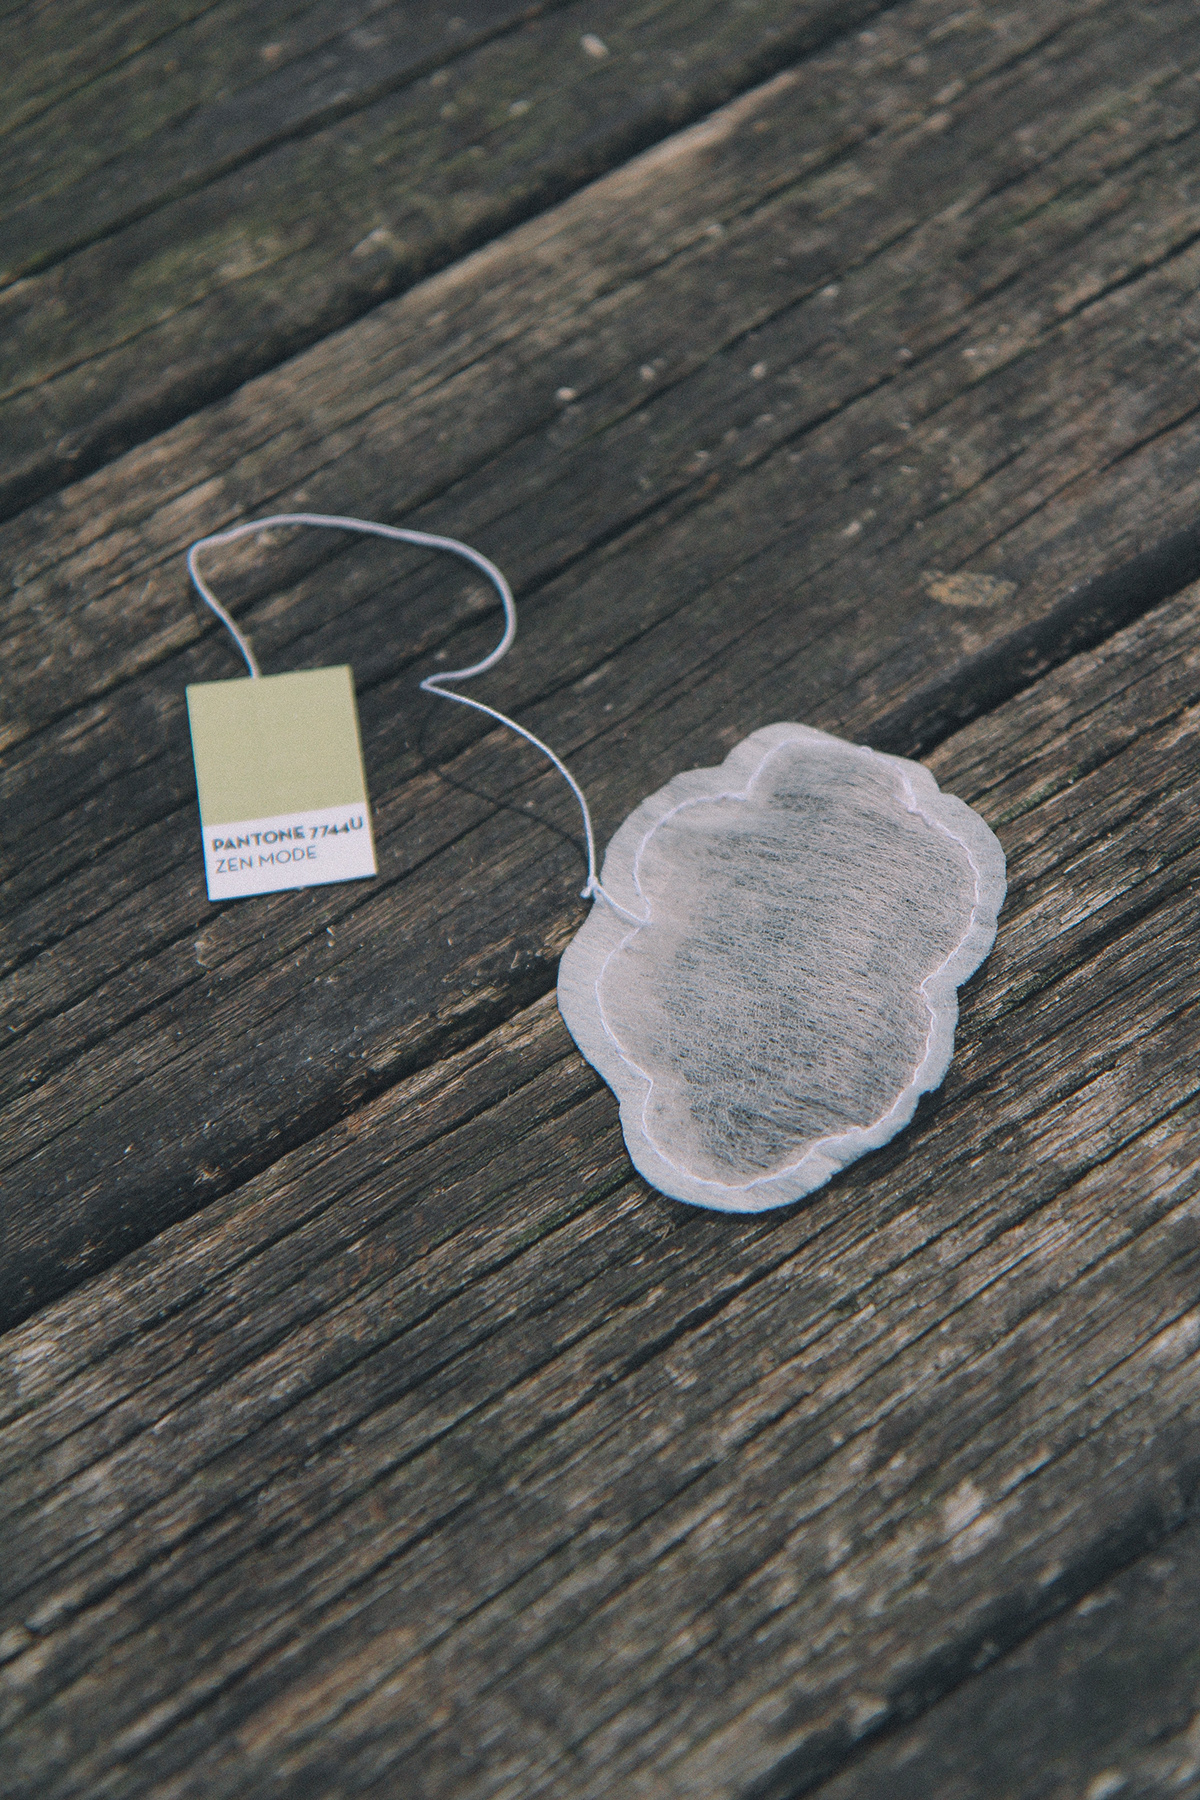 tea pantone teabags memento designer's memento clouds handmade